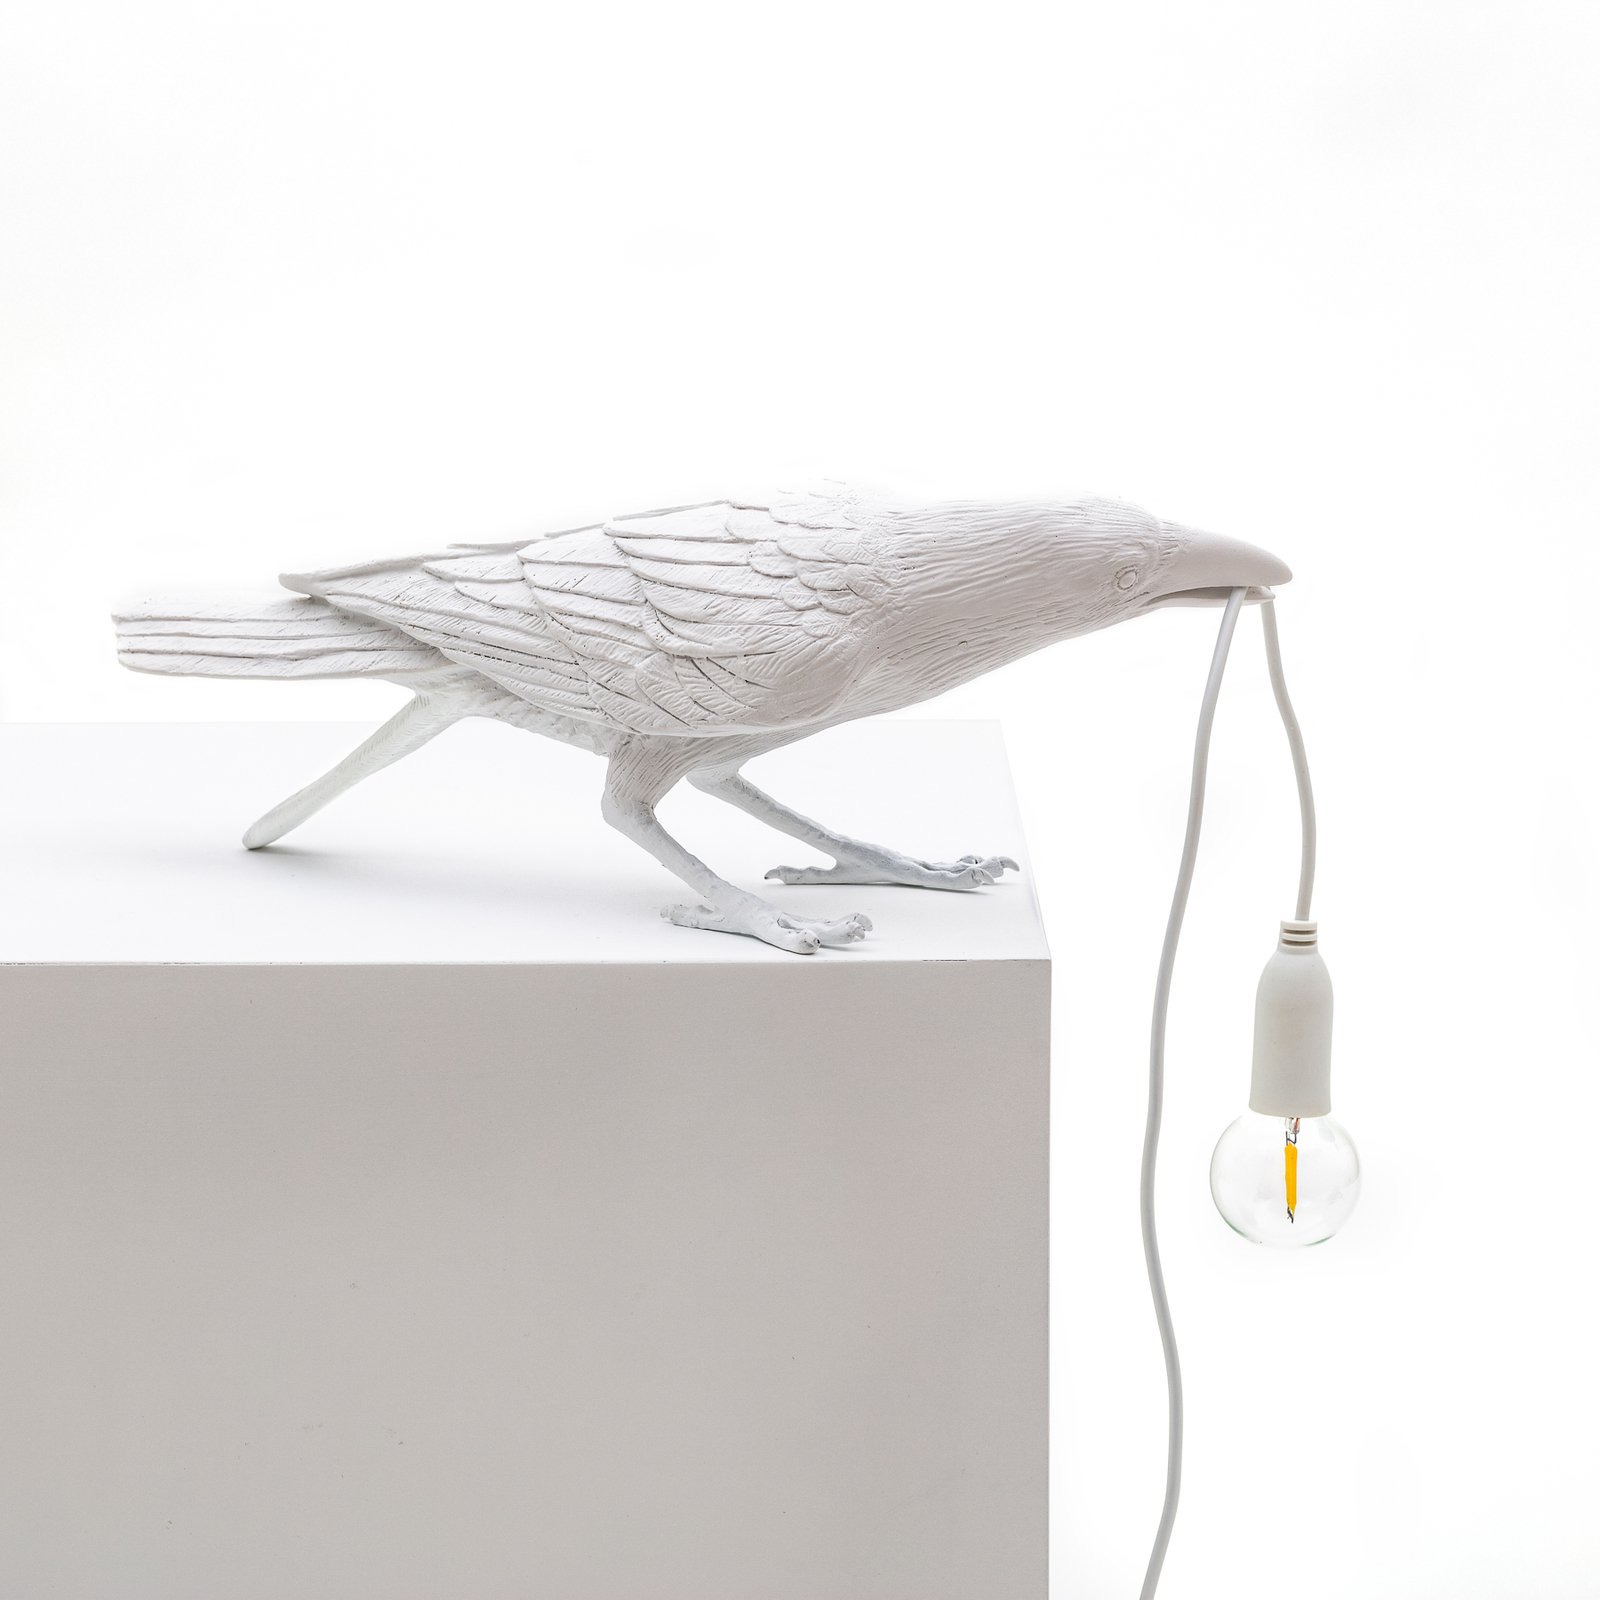 LED decoratie-terraslamp Bird Lamp, spelend wit